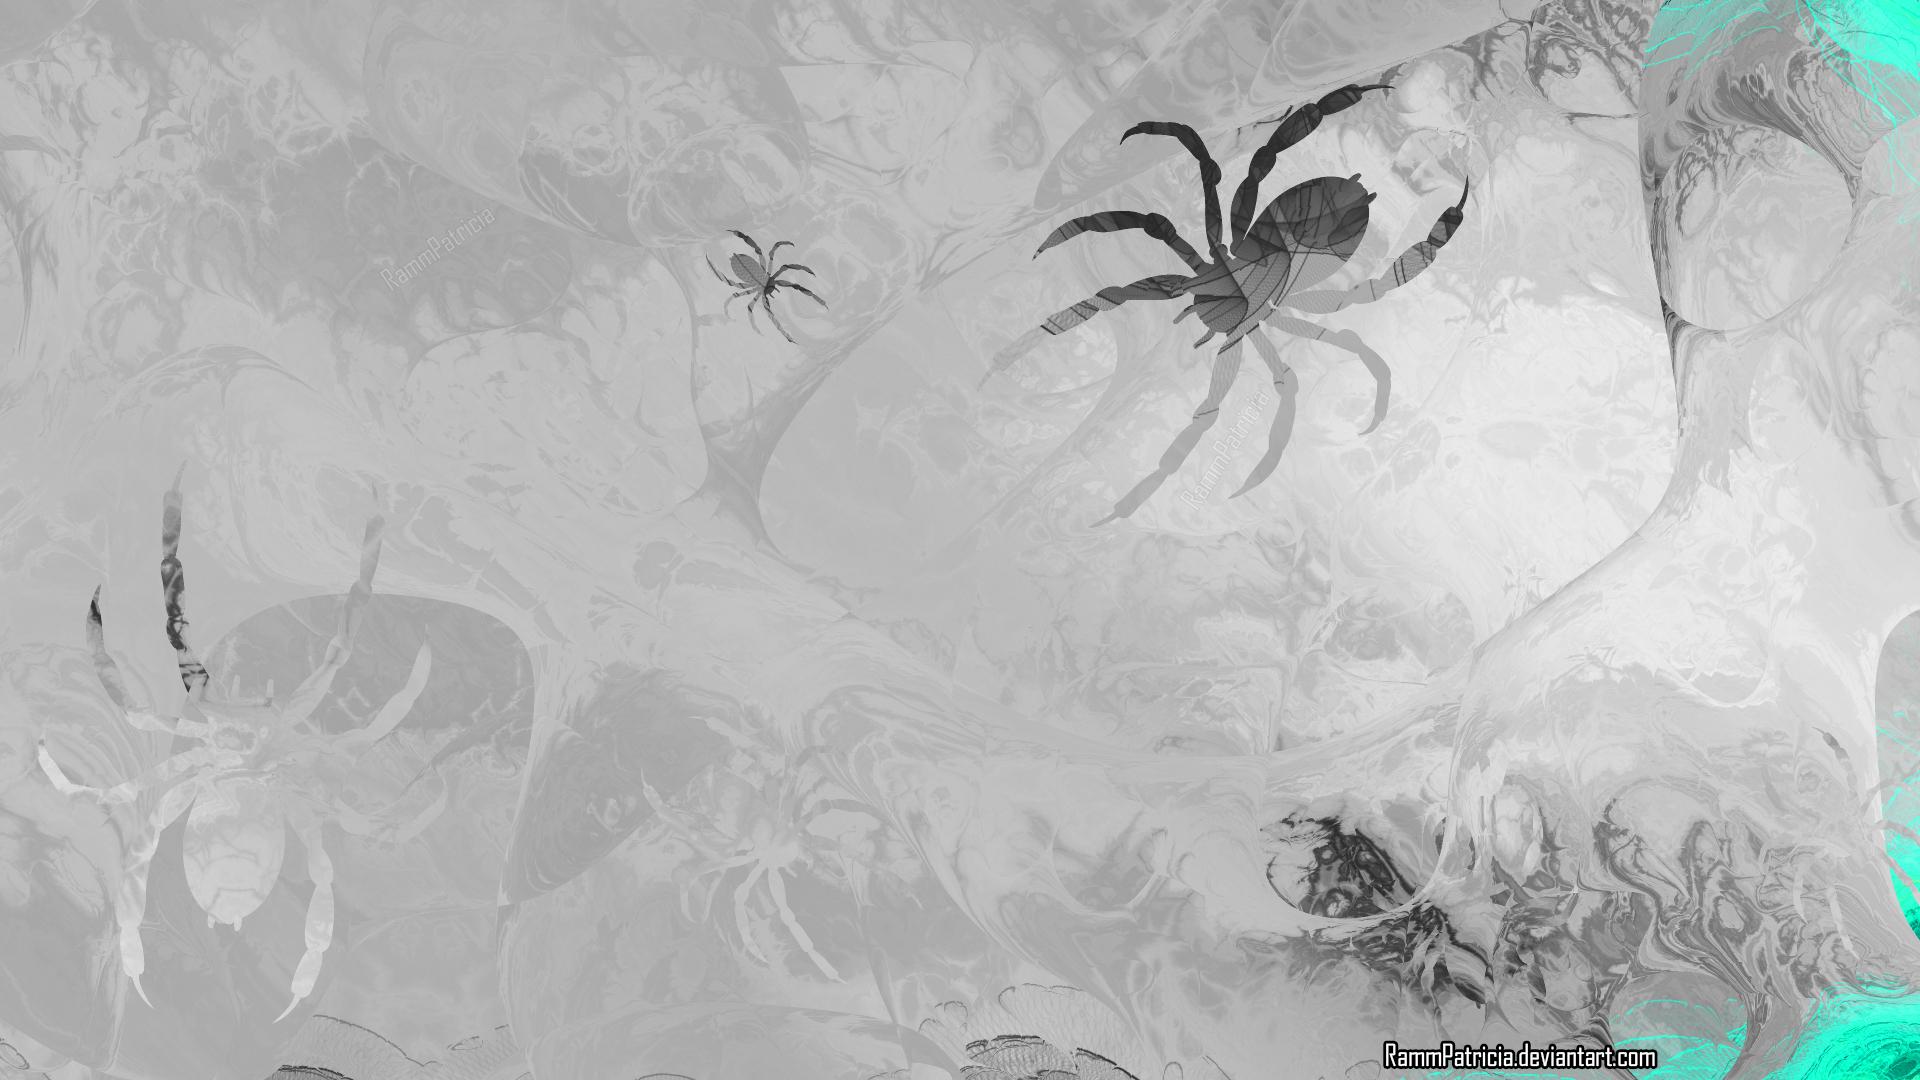 HD wallpaper, Abstract, Tarantula, Digital Art, Spider, Rammpatricia